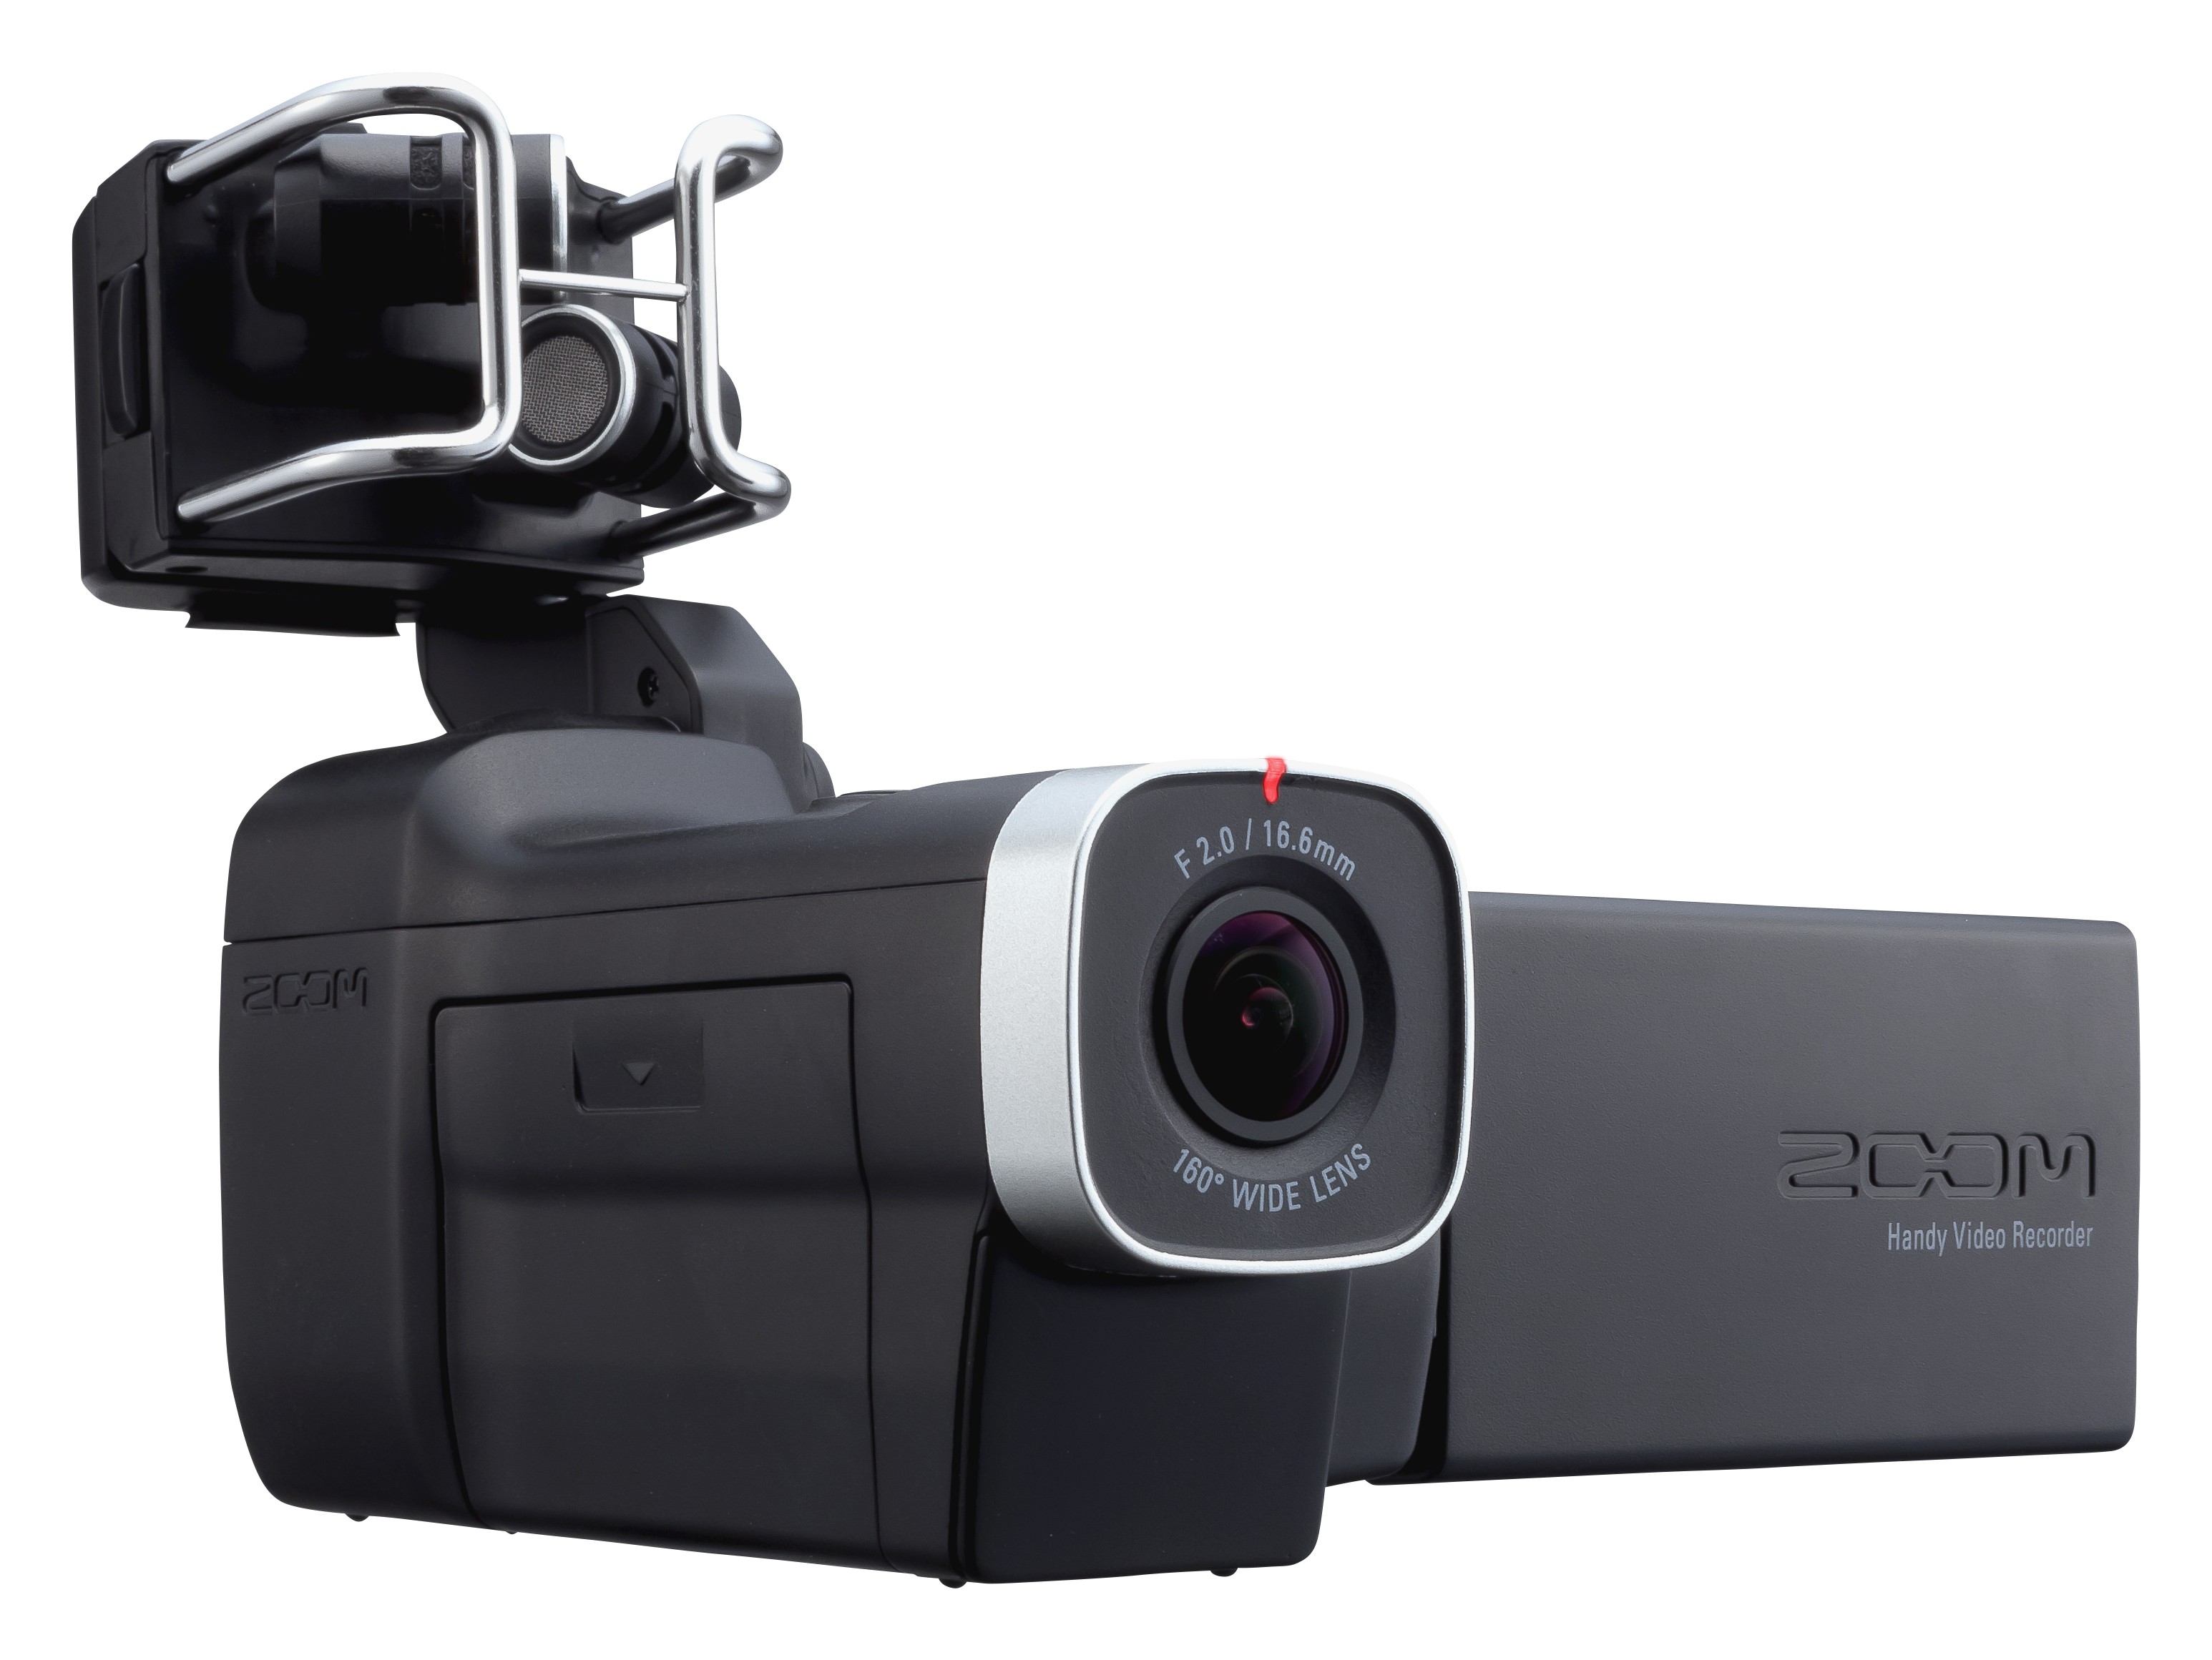 Zoom Q8 Handy Video Recorder - Black : Digital Video Camera ...